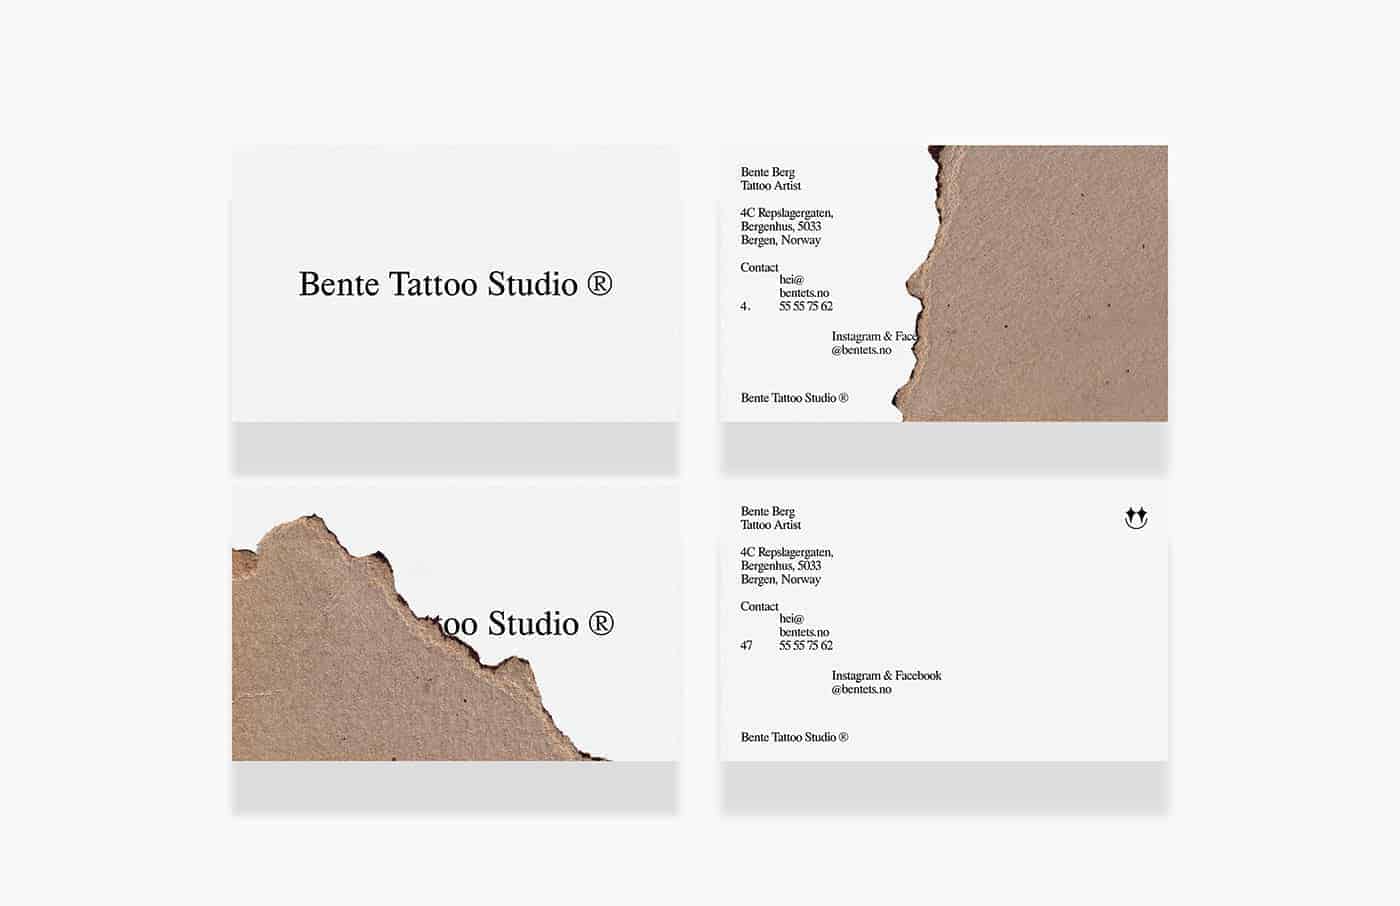 Bente Tattoo Studio ®